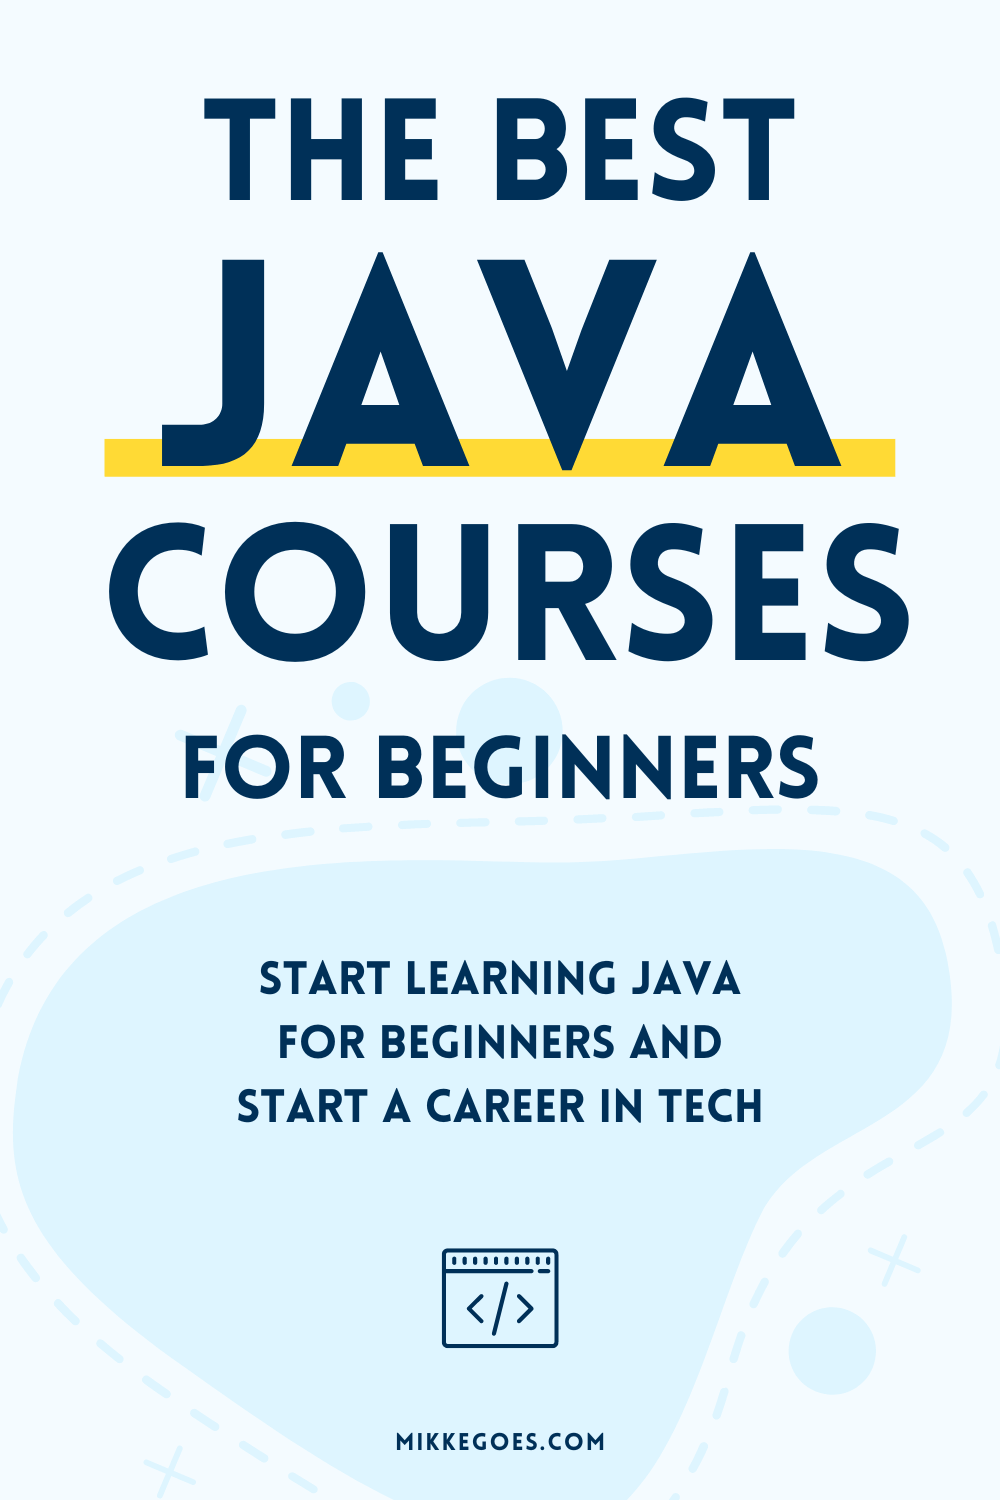 The best Java courses for beginners - Start learning Java programming online